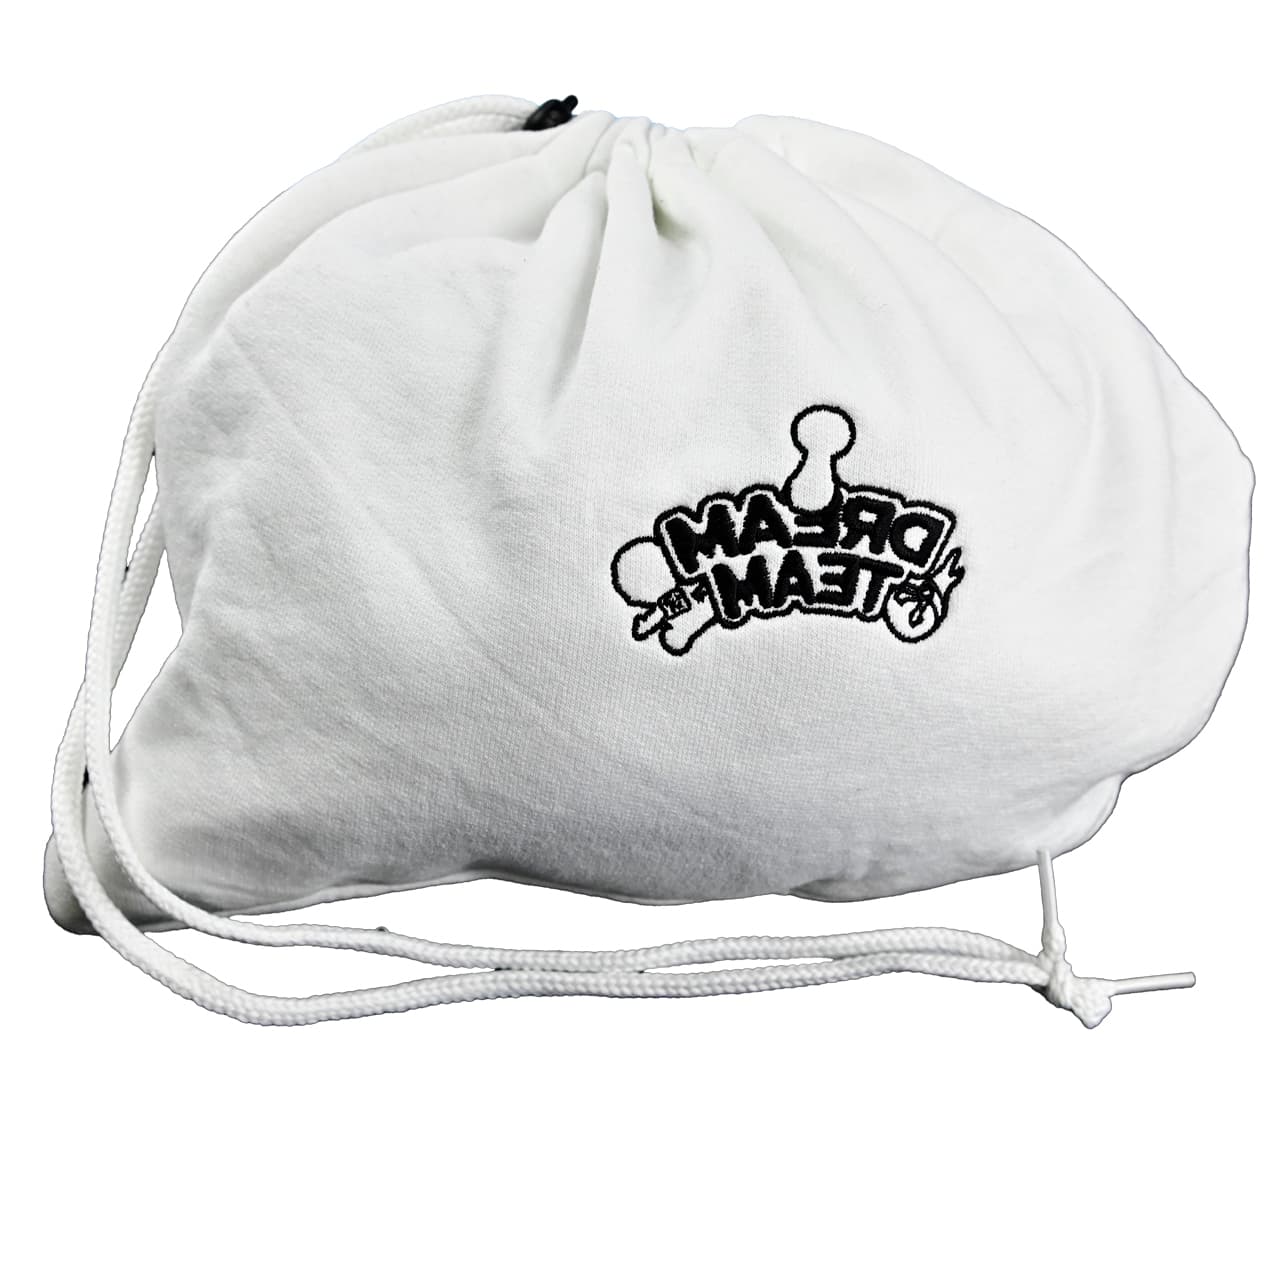 Dream Team Embroidered Hoodie Bag